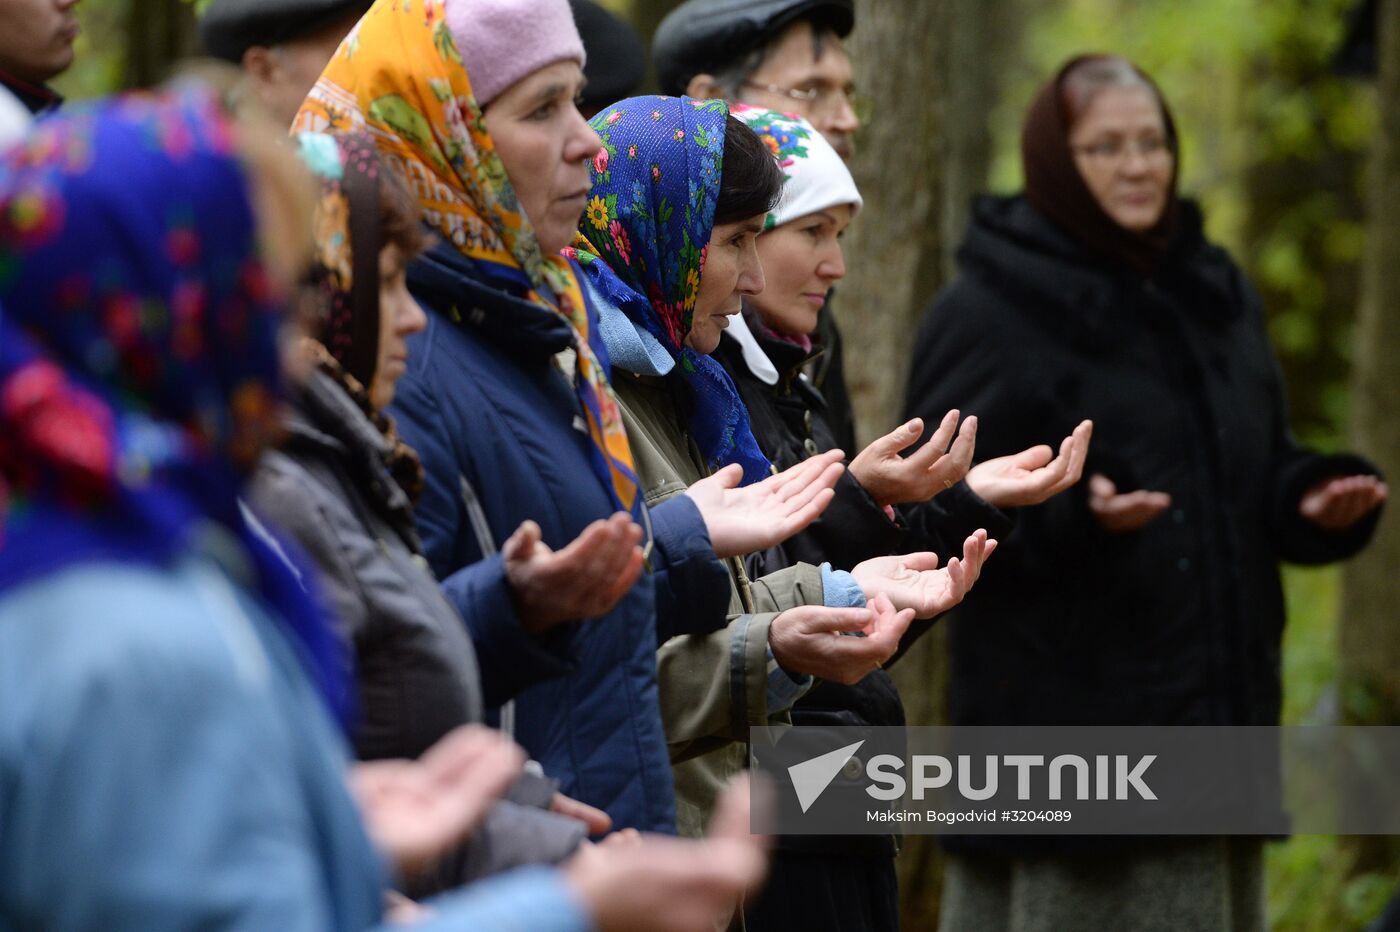 Mari native religion followers hold prayer service in sacred grove